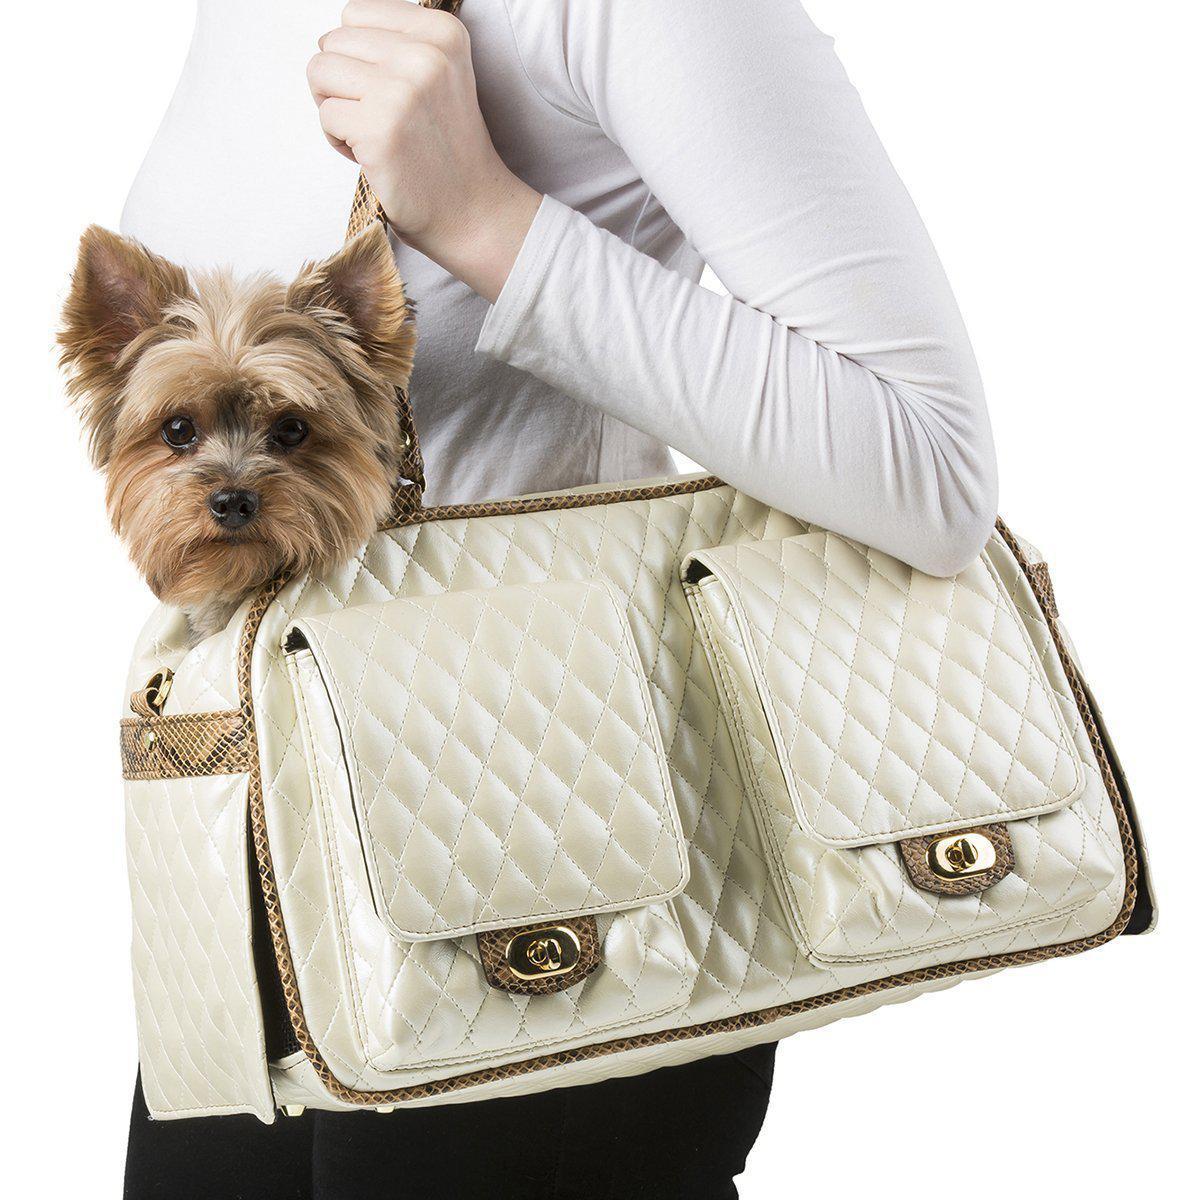  Petote Haylee Quilted Luxe Designer Dog Bag : Pet Supplies